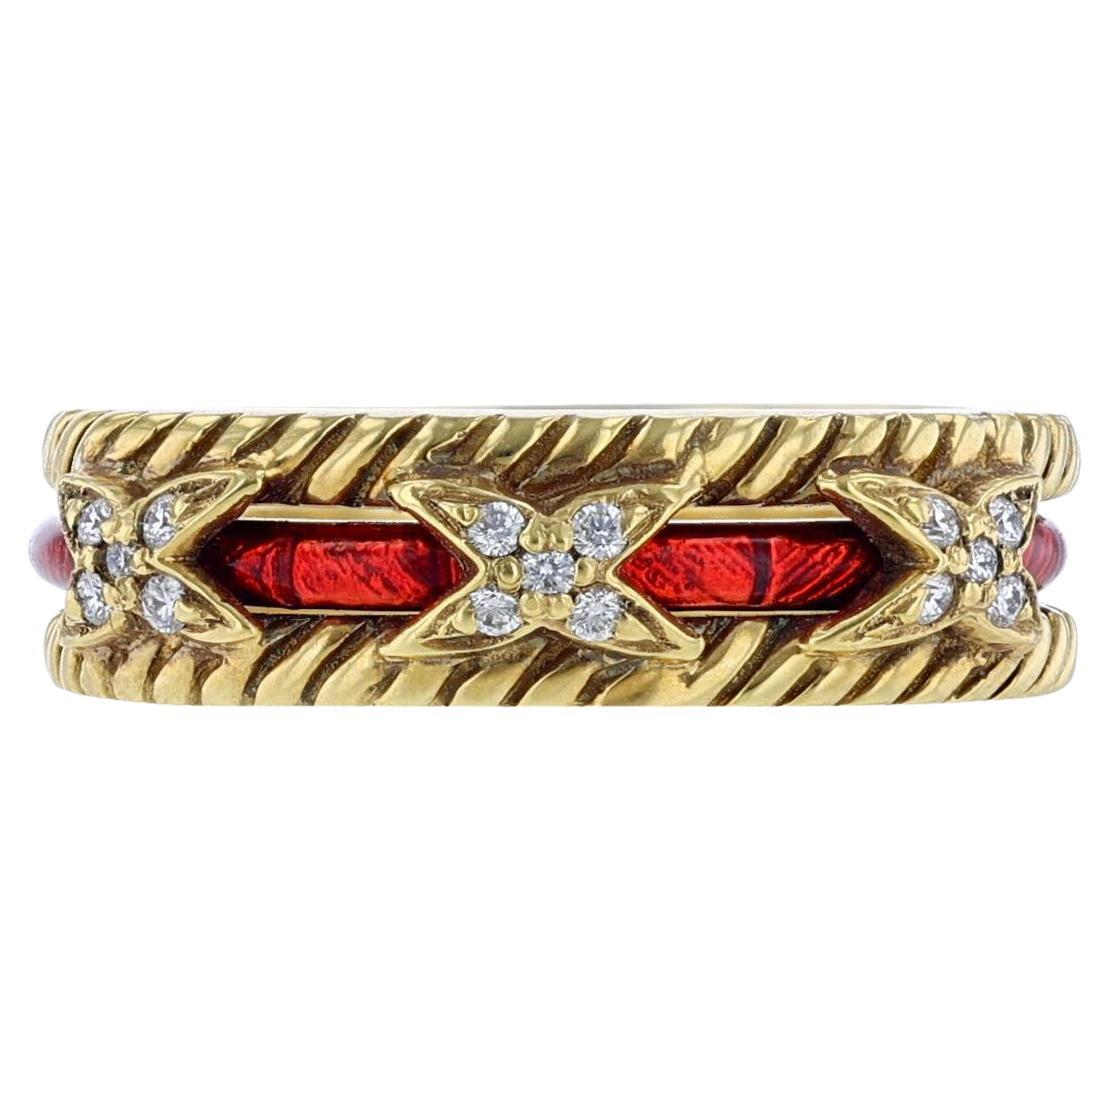 Hidalgo 18K Yellow Gold Diamond Jacket with Red Enamel Insert Ring Set